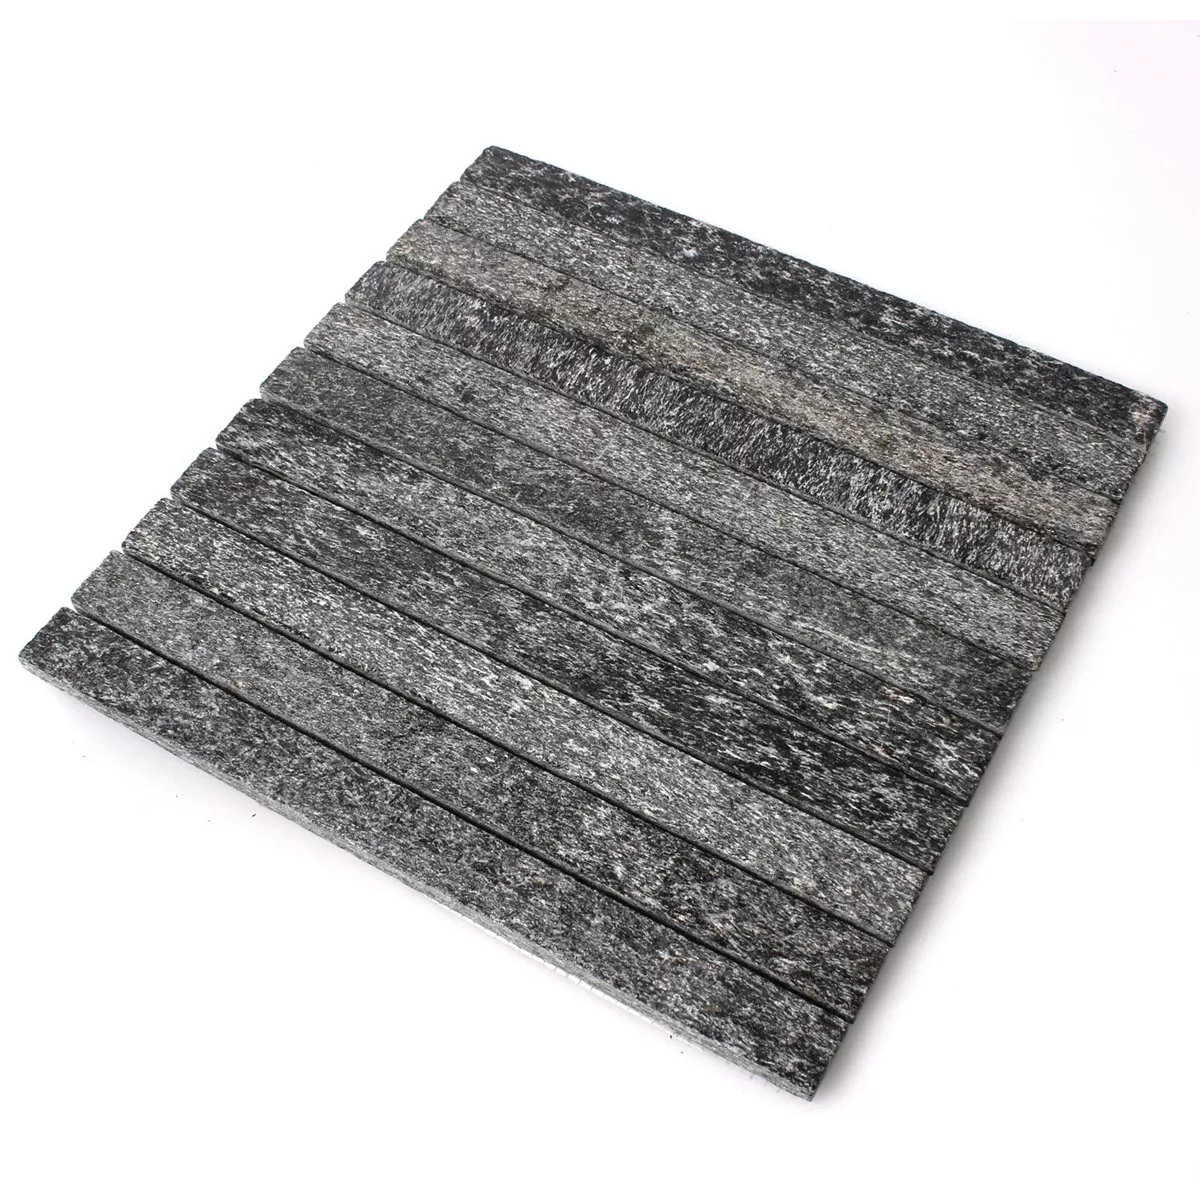 Sample Mosaic Tiles Natural Stone Quartzite Sticks Black